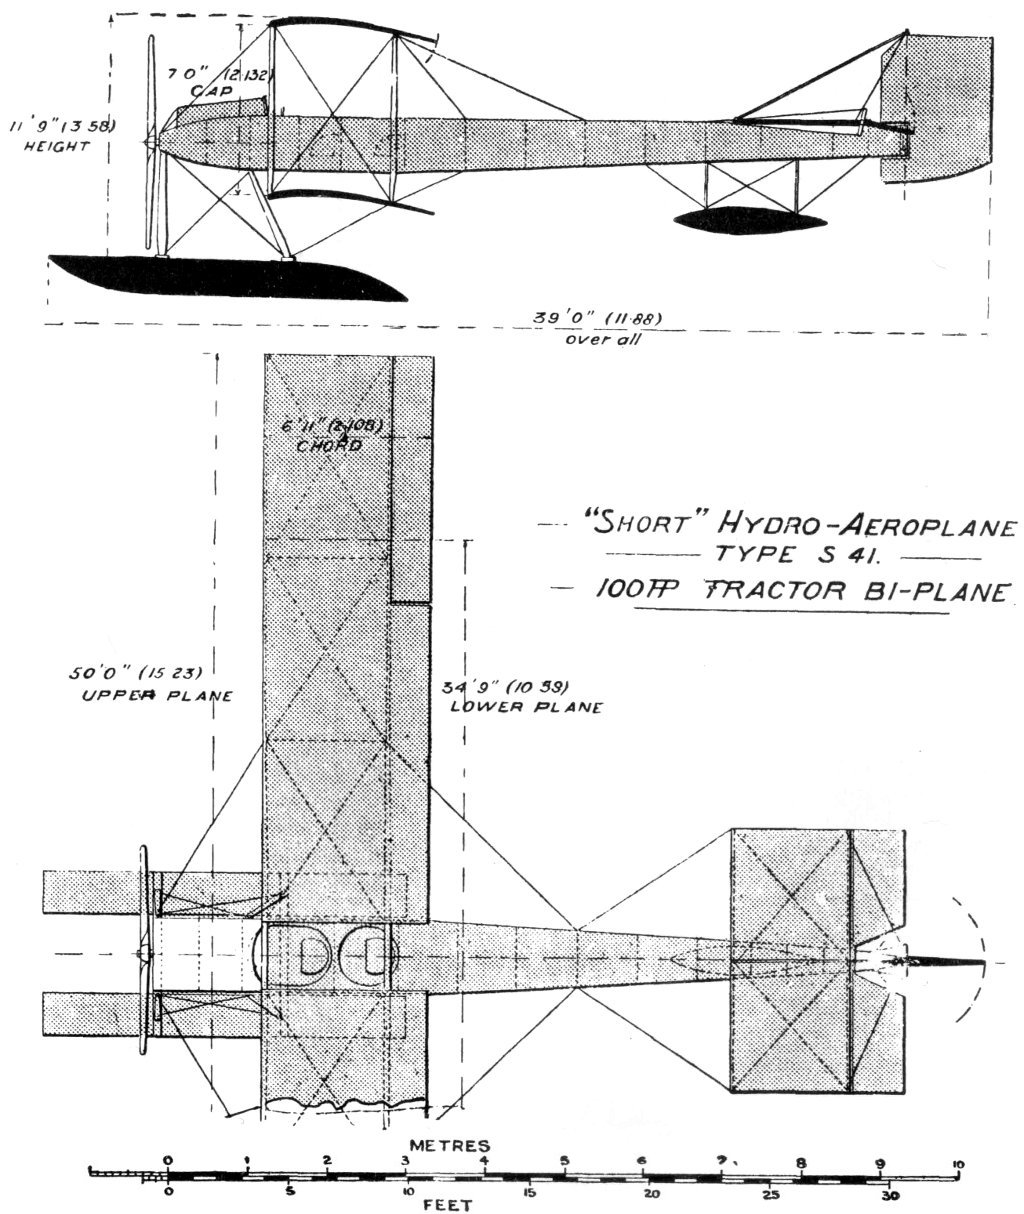 Short. Hydro. "Short" Hydro-Aeroplane type s 41. 100 FP TRACTOR BI-PLANE Uniform Aeroplane Scale